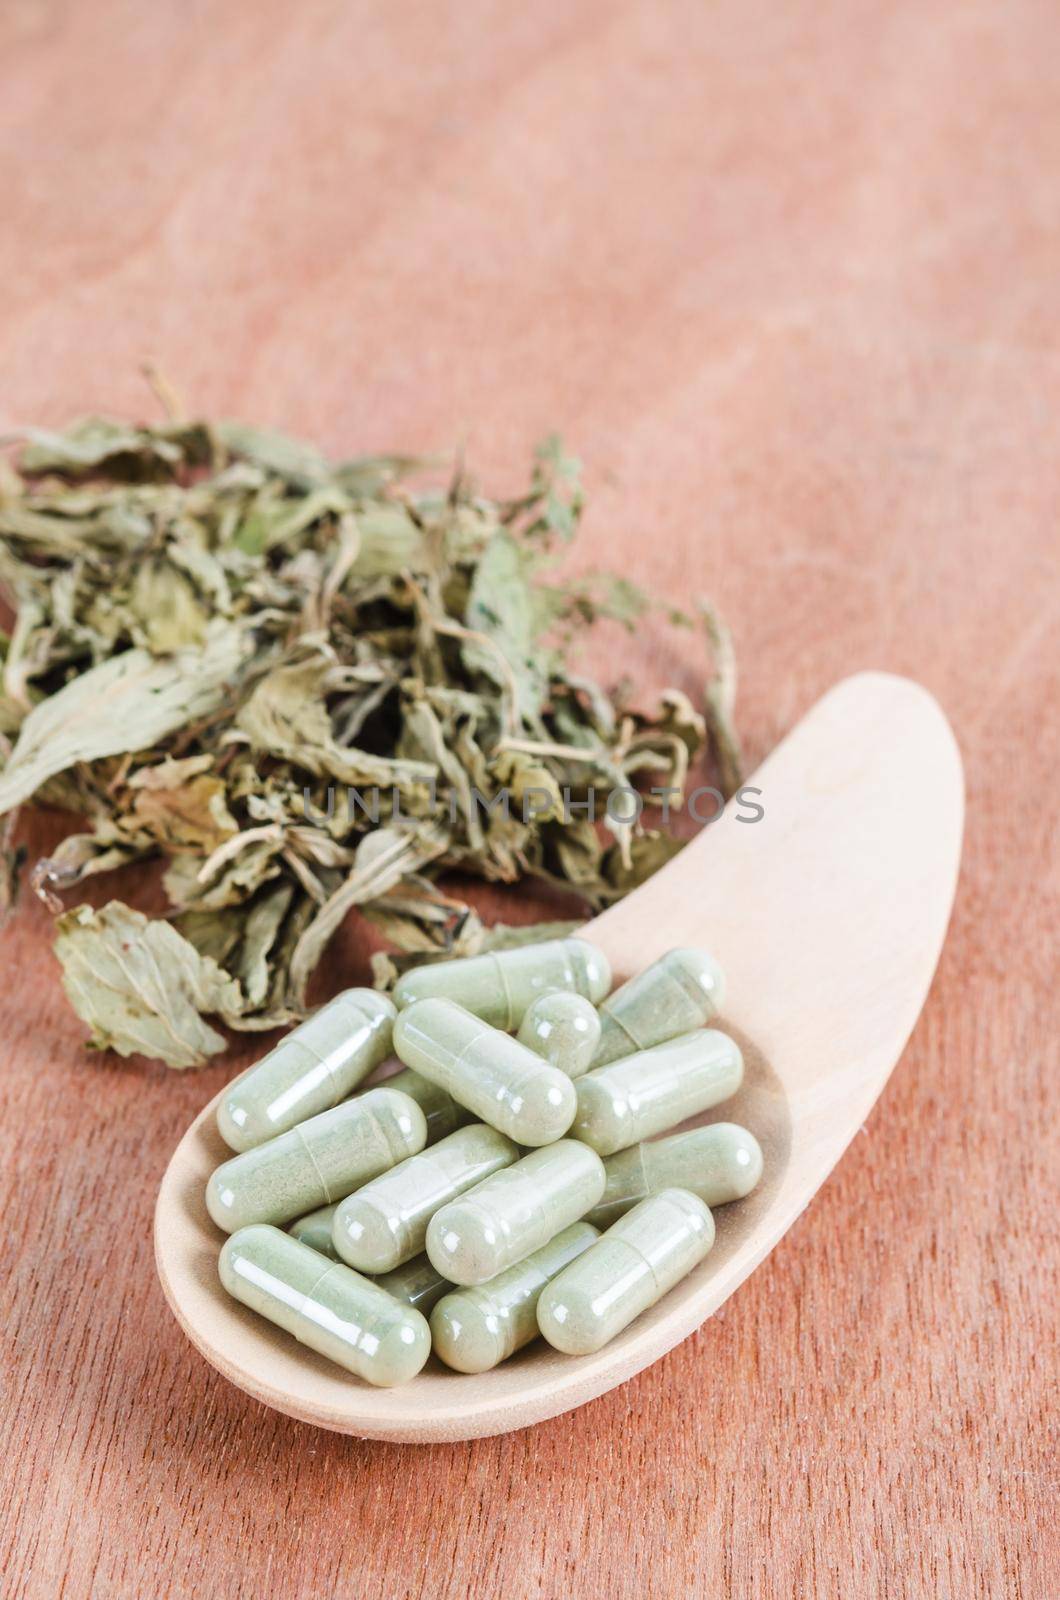 Pile of herbal medicine in capsules with herb dry leaf. by Gamjai